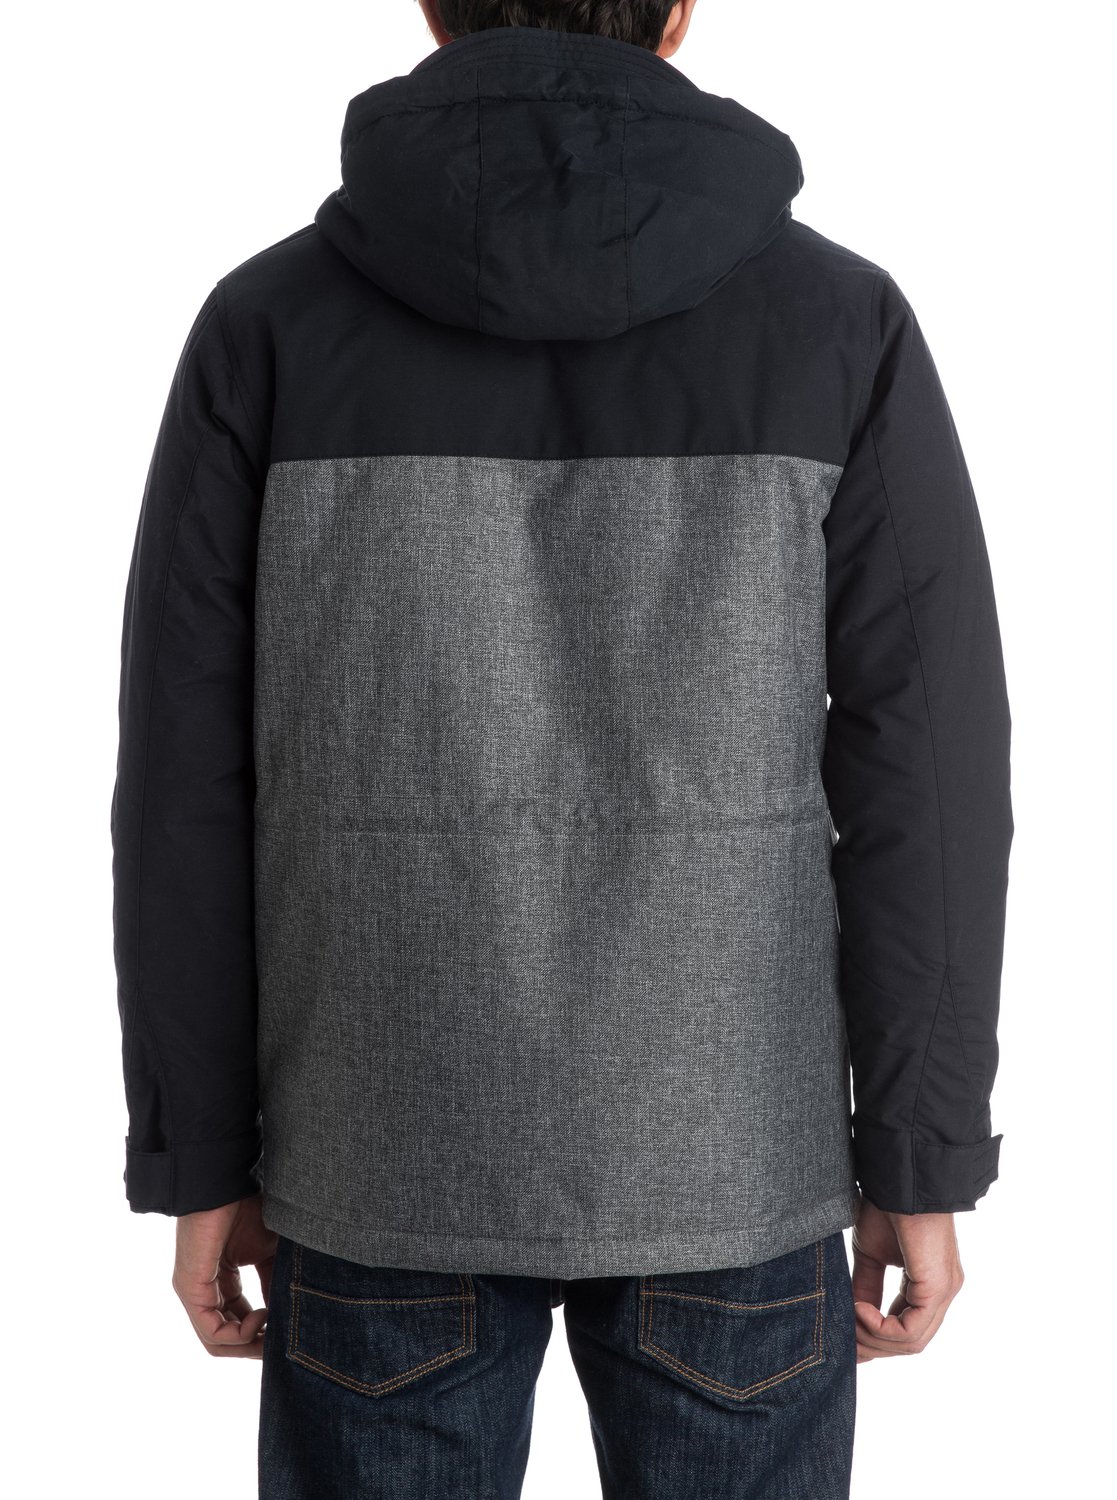 Longbay Wool - Outdoor Jacket EQYJK03132 | Quiksilver